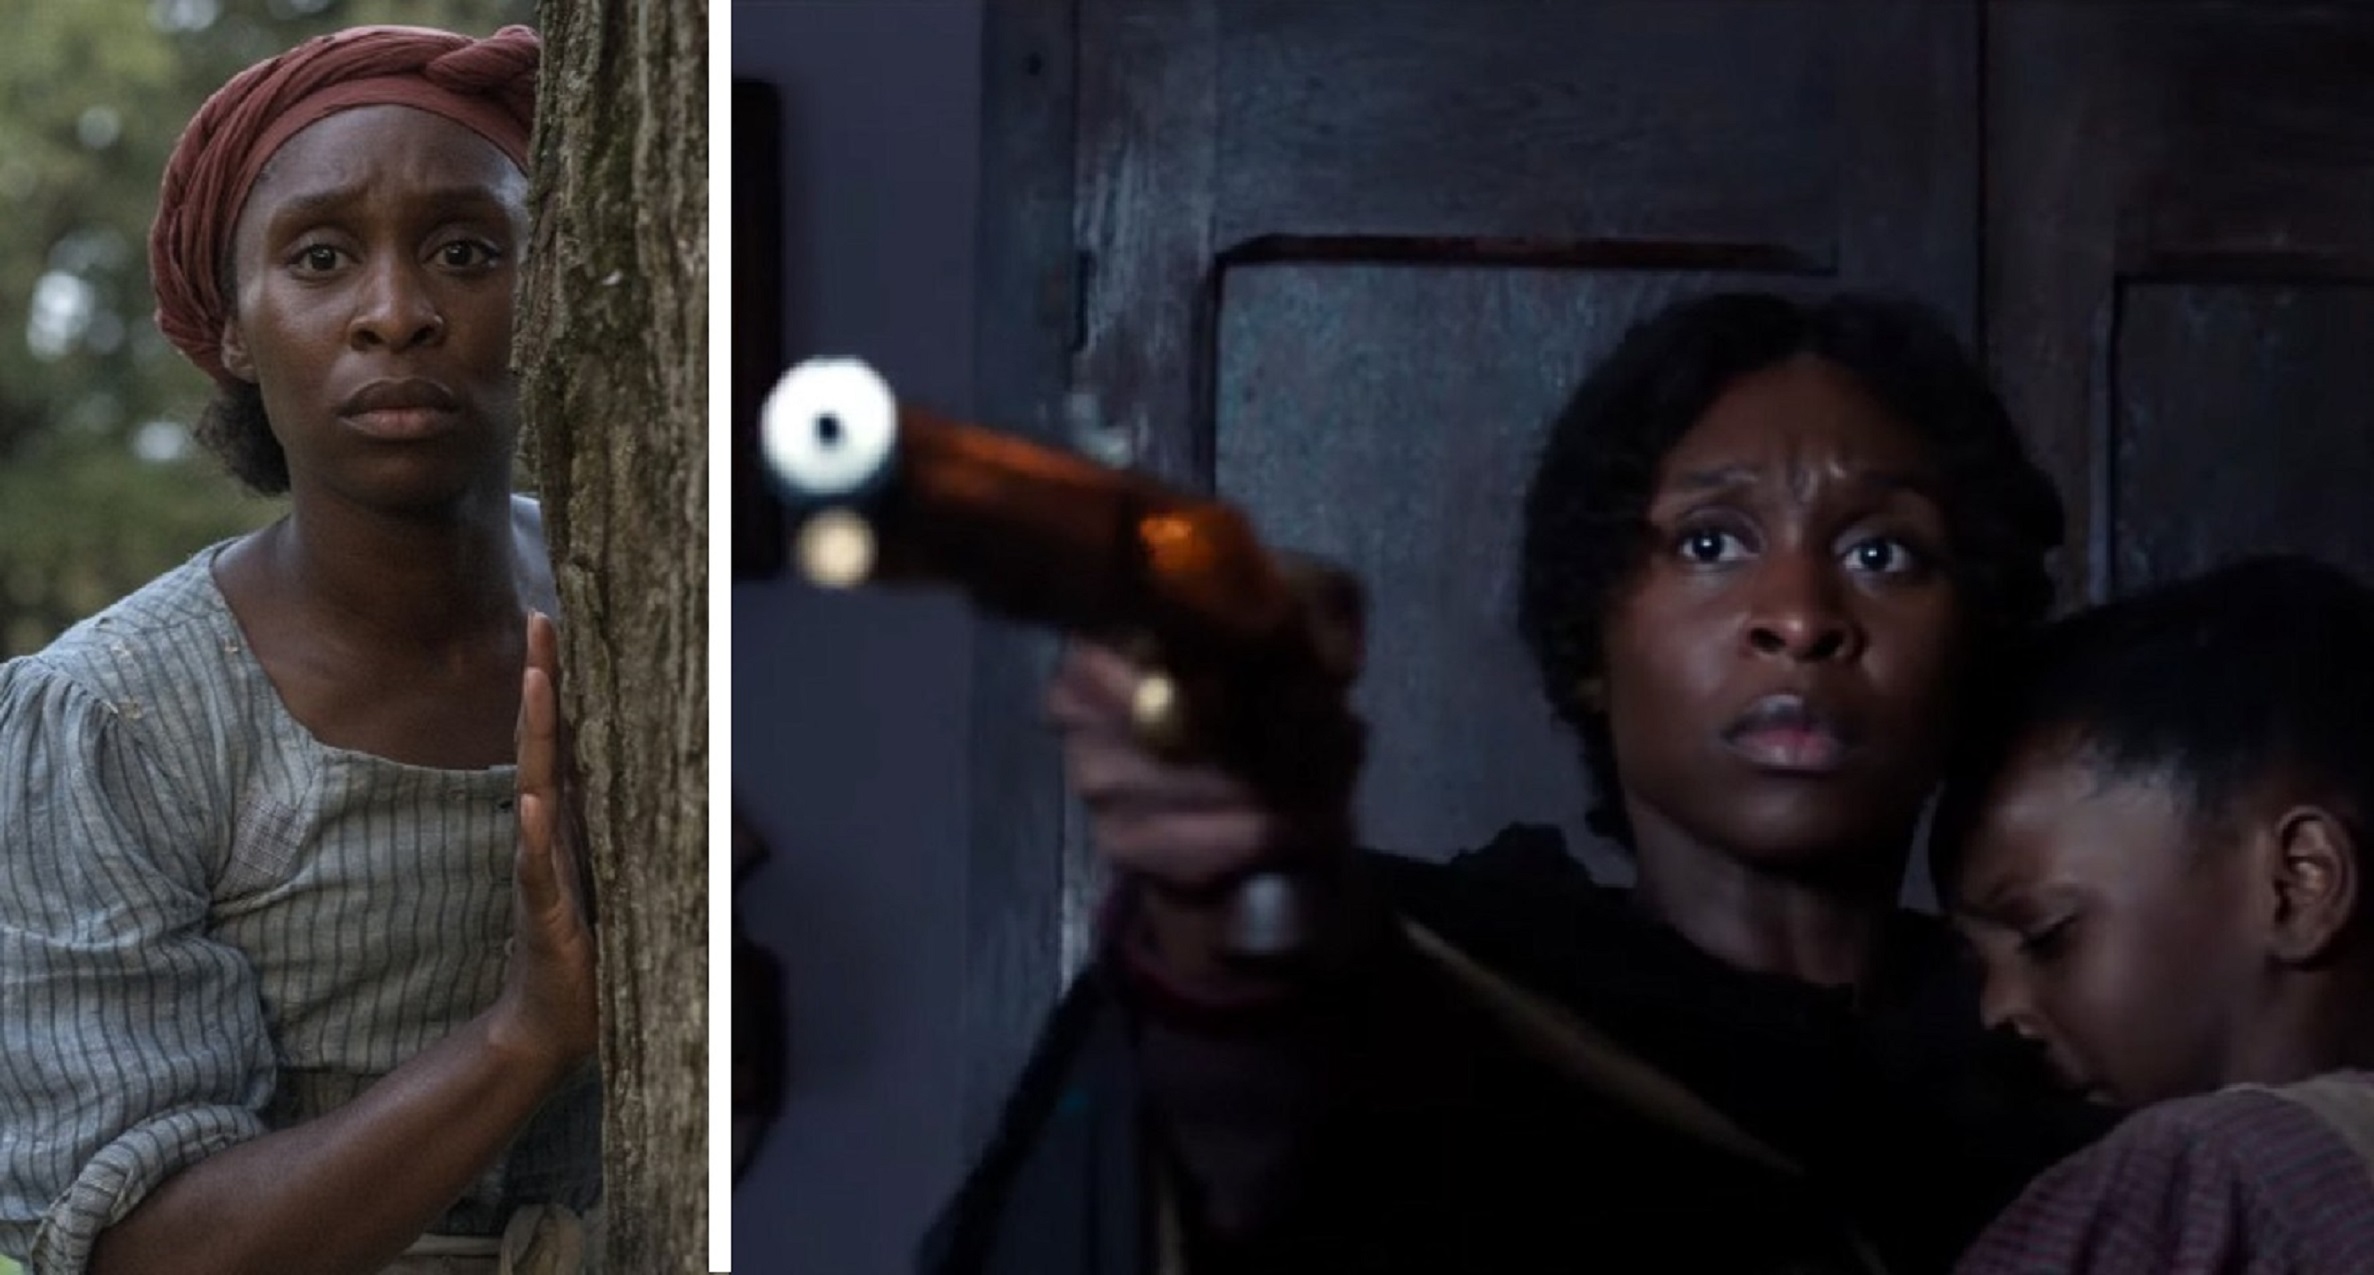 Watch: Cynthia Erivo Transforms Into Harriet Tubman, in New Trailer for ‘Harriet’